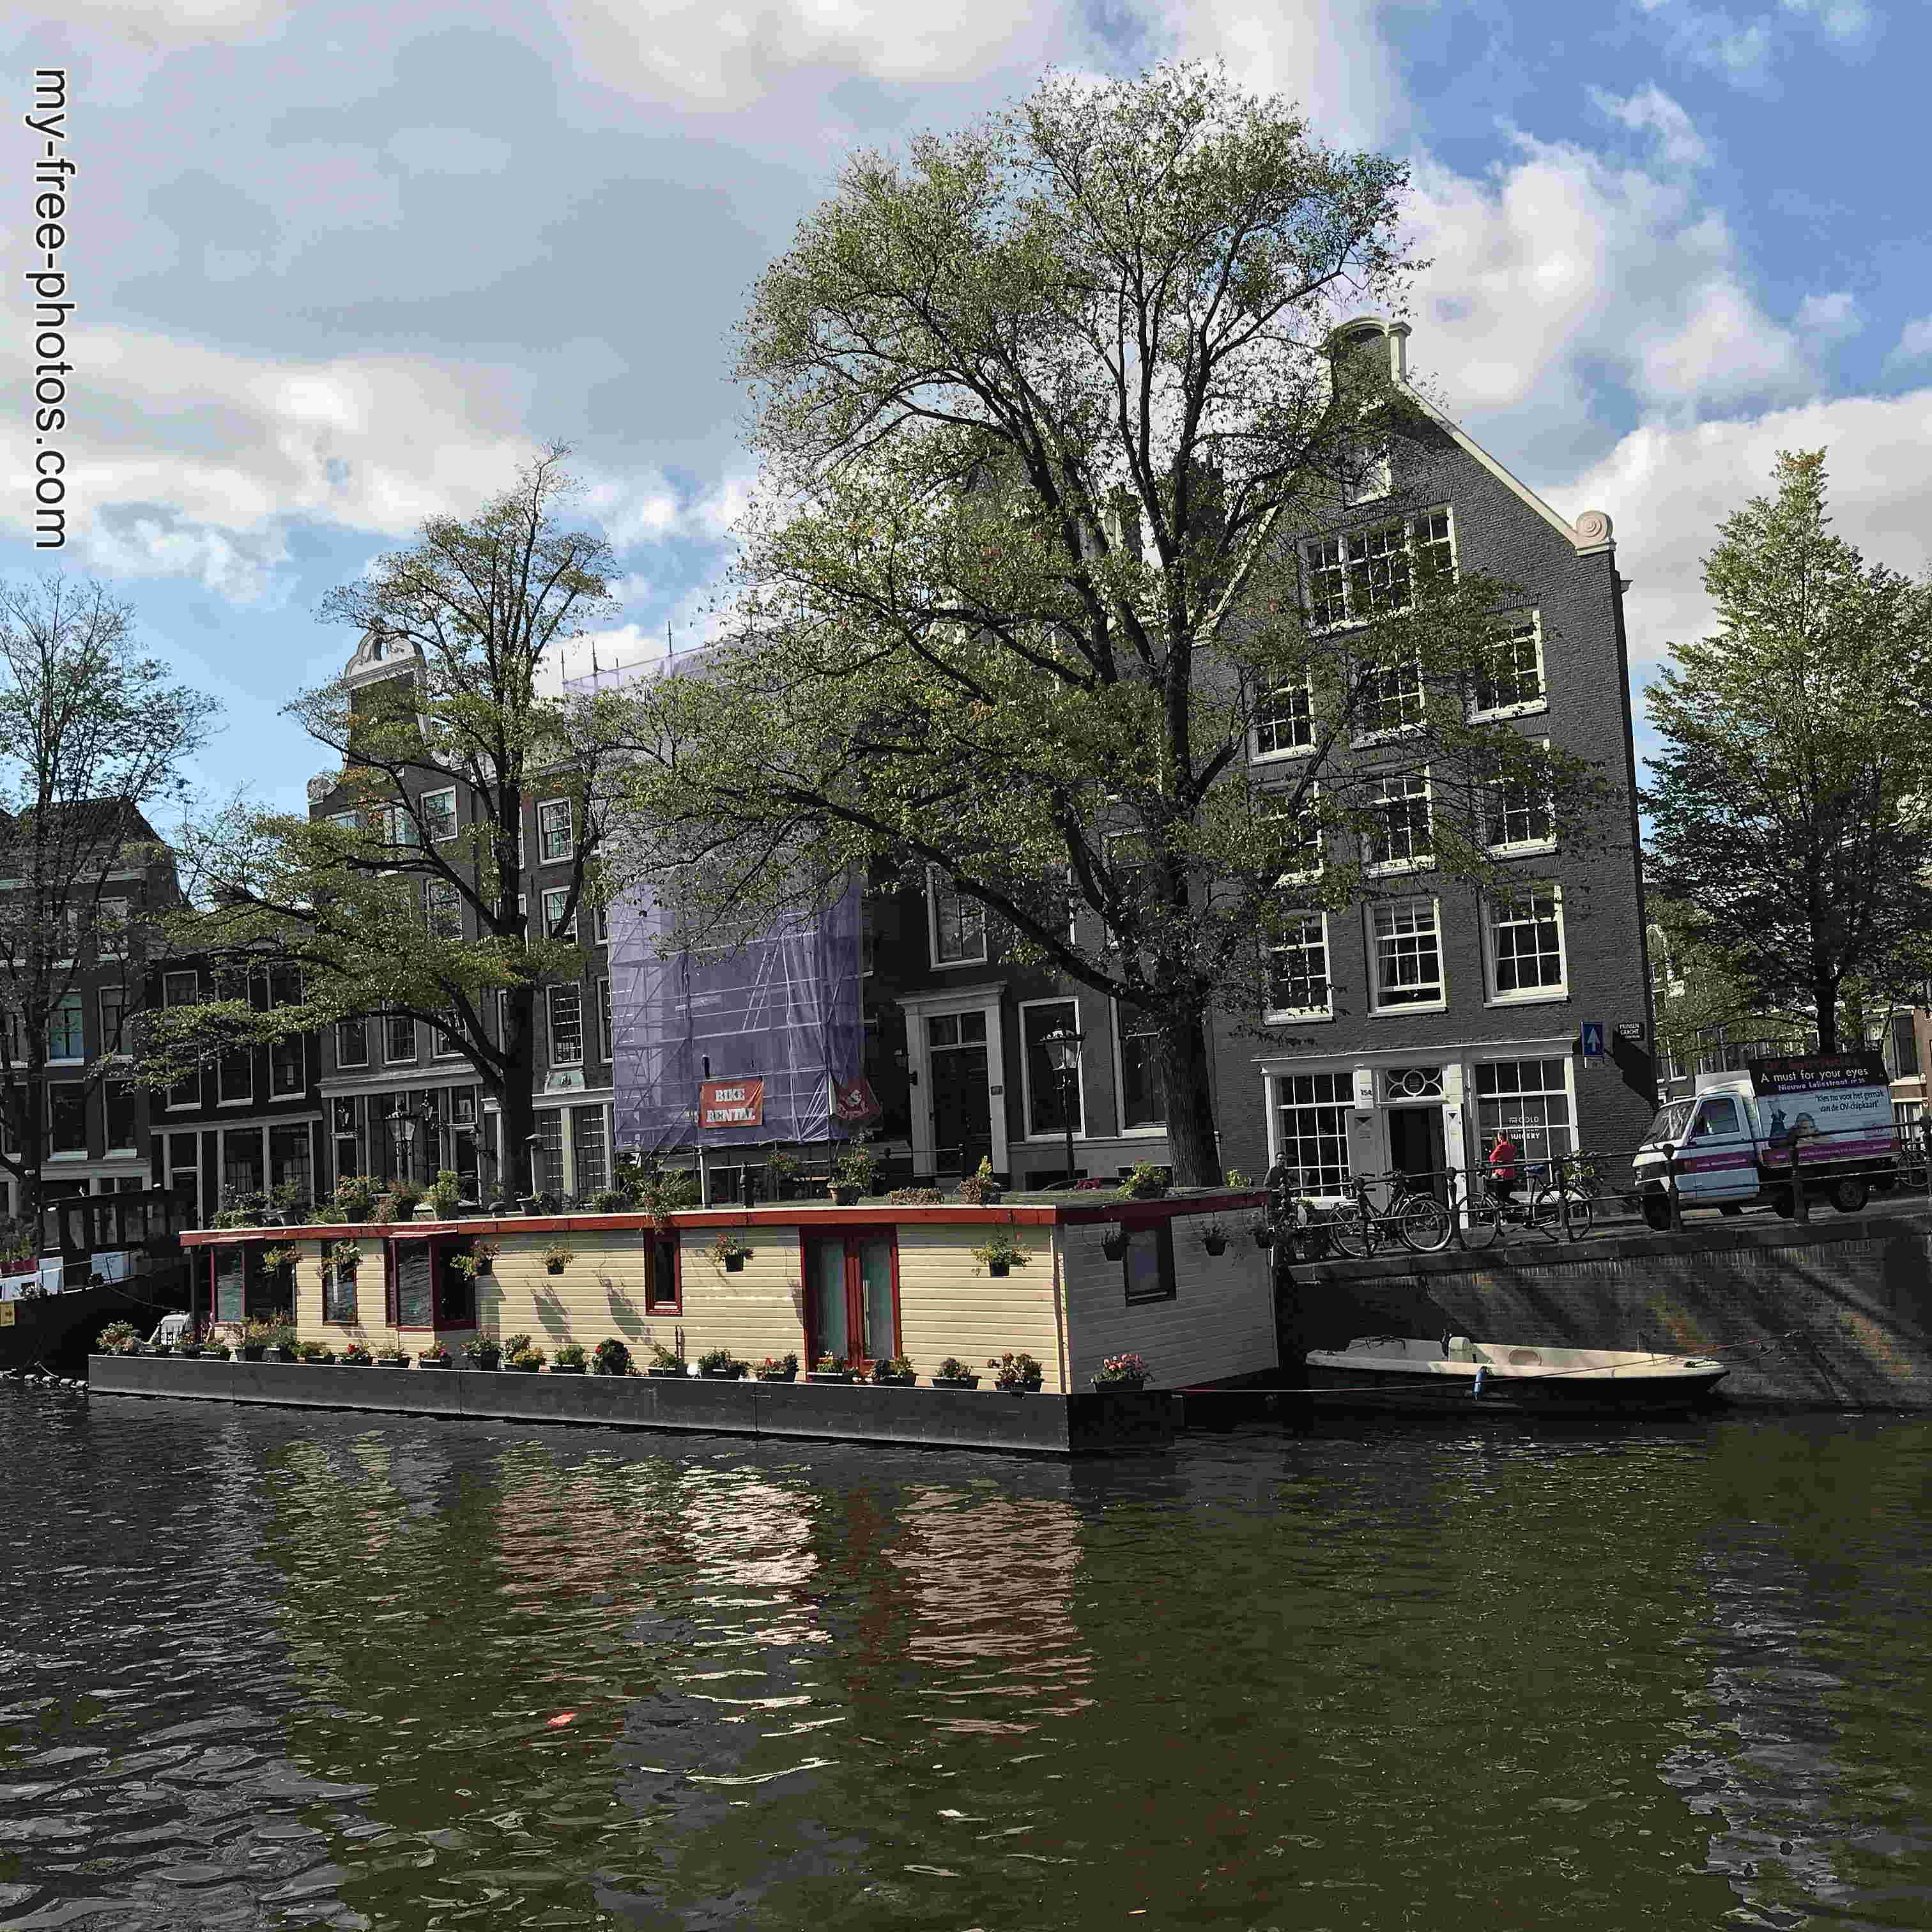 Amsterdam Boat Home.